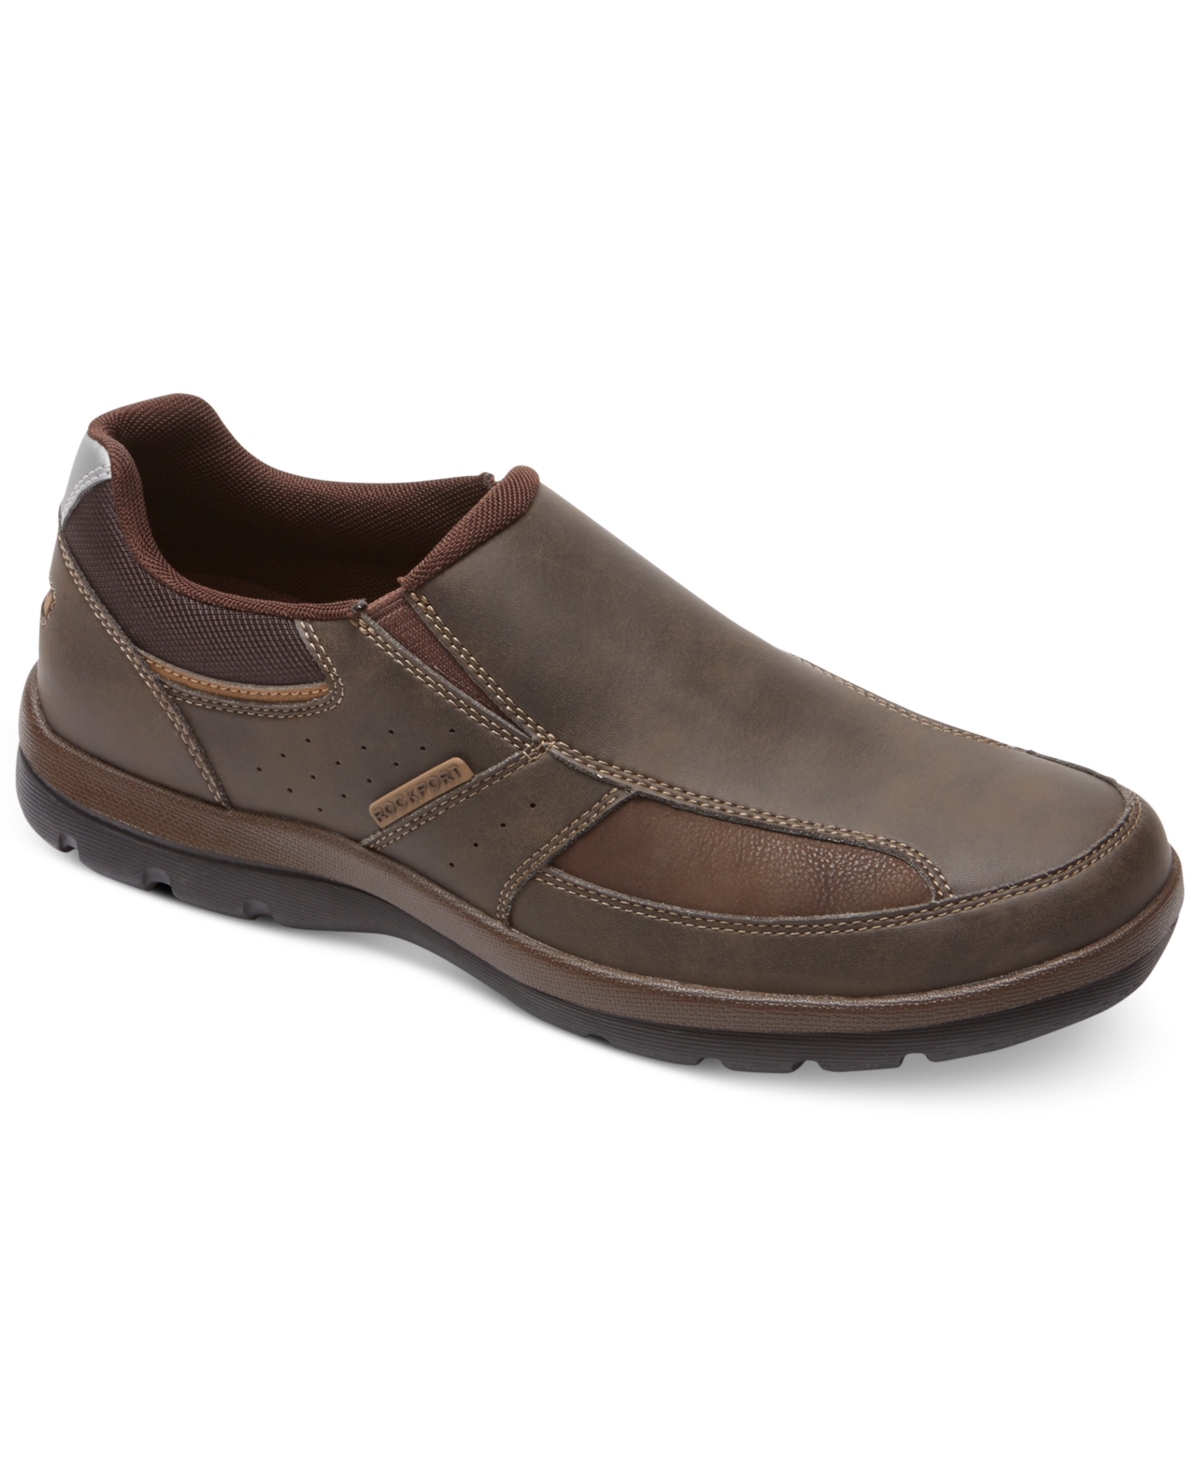 Men's Get Your Kicks Slip On Shoes - Brown